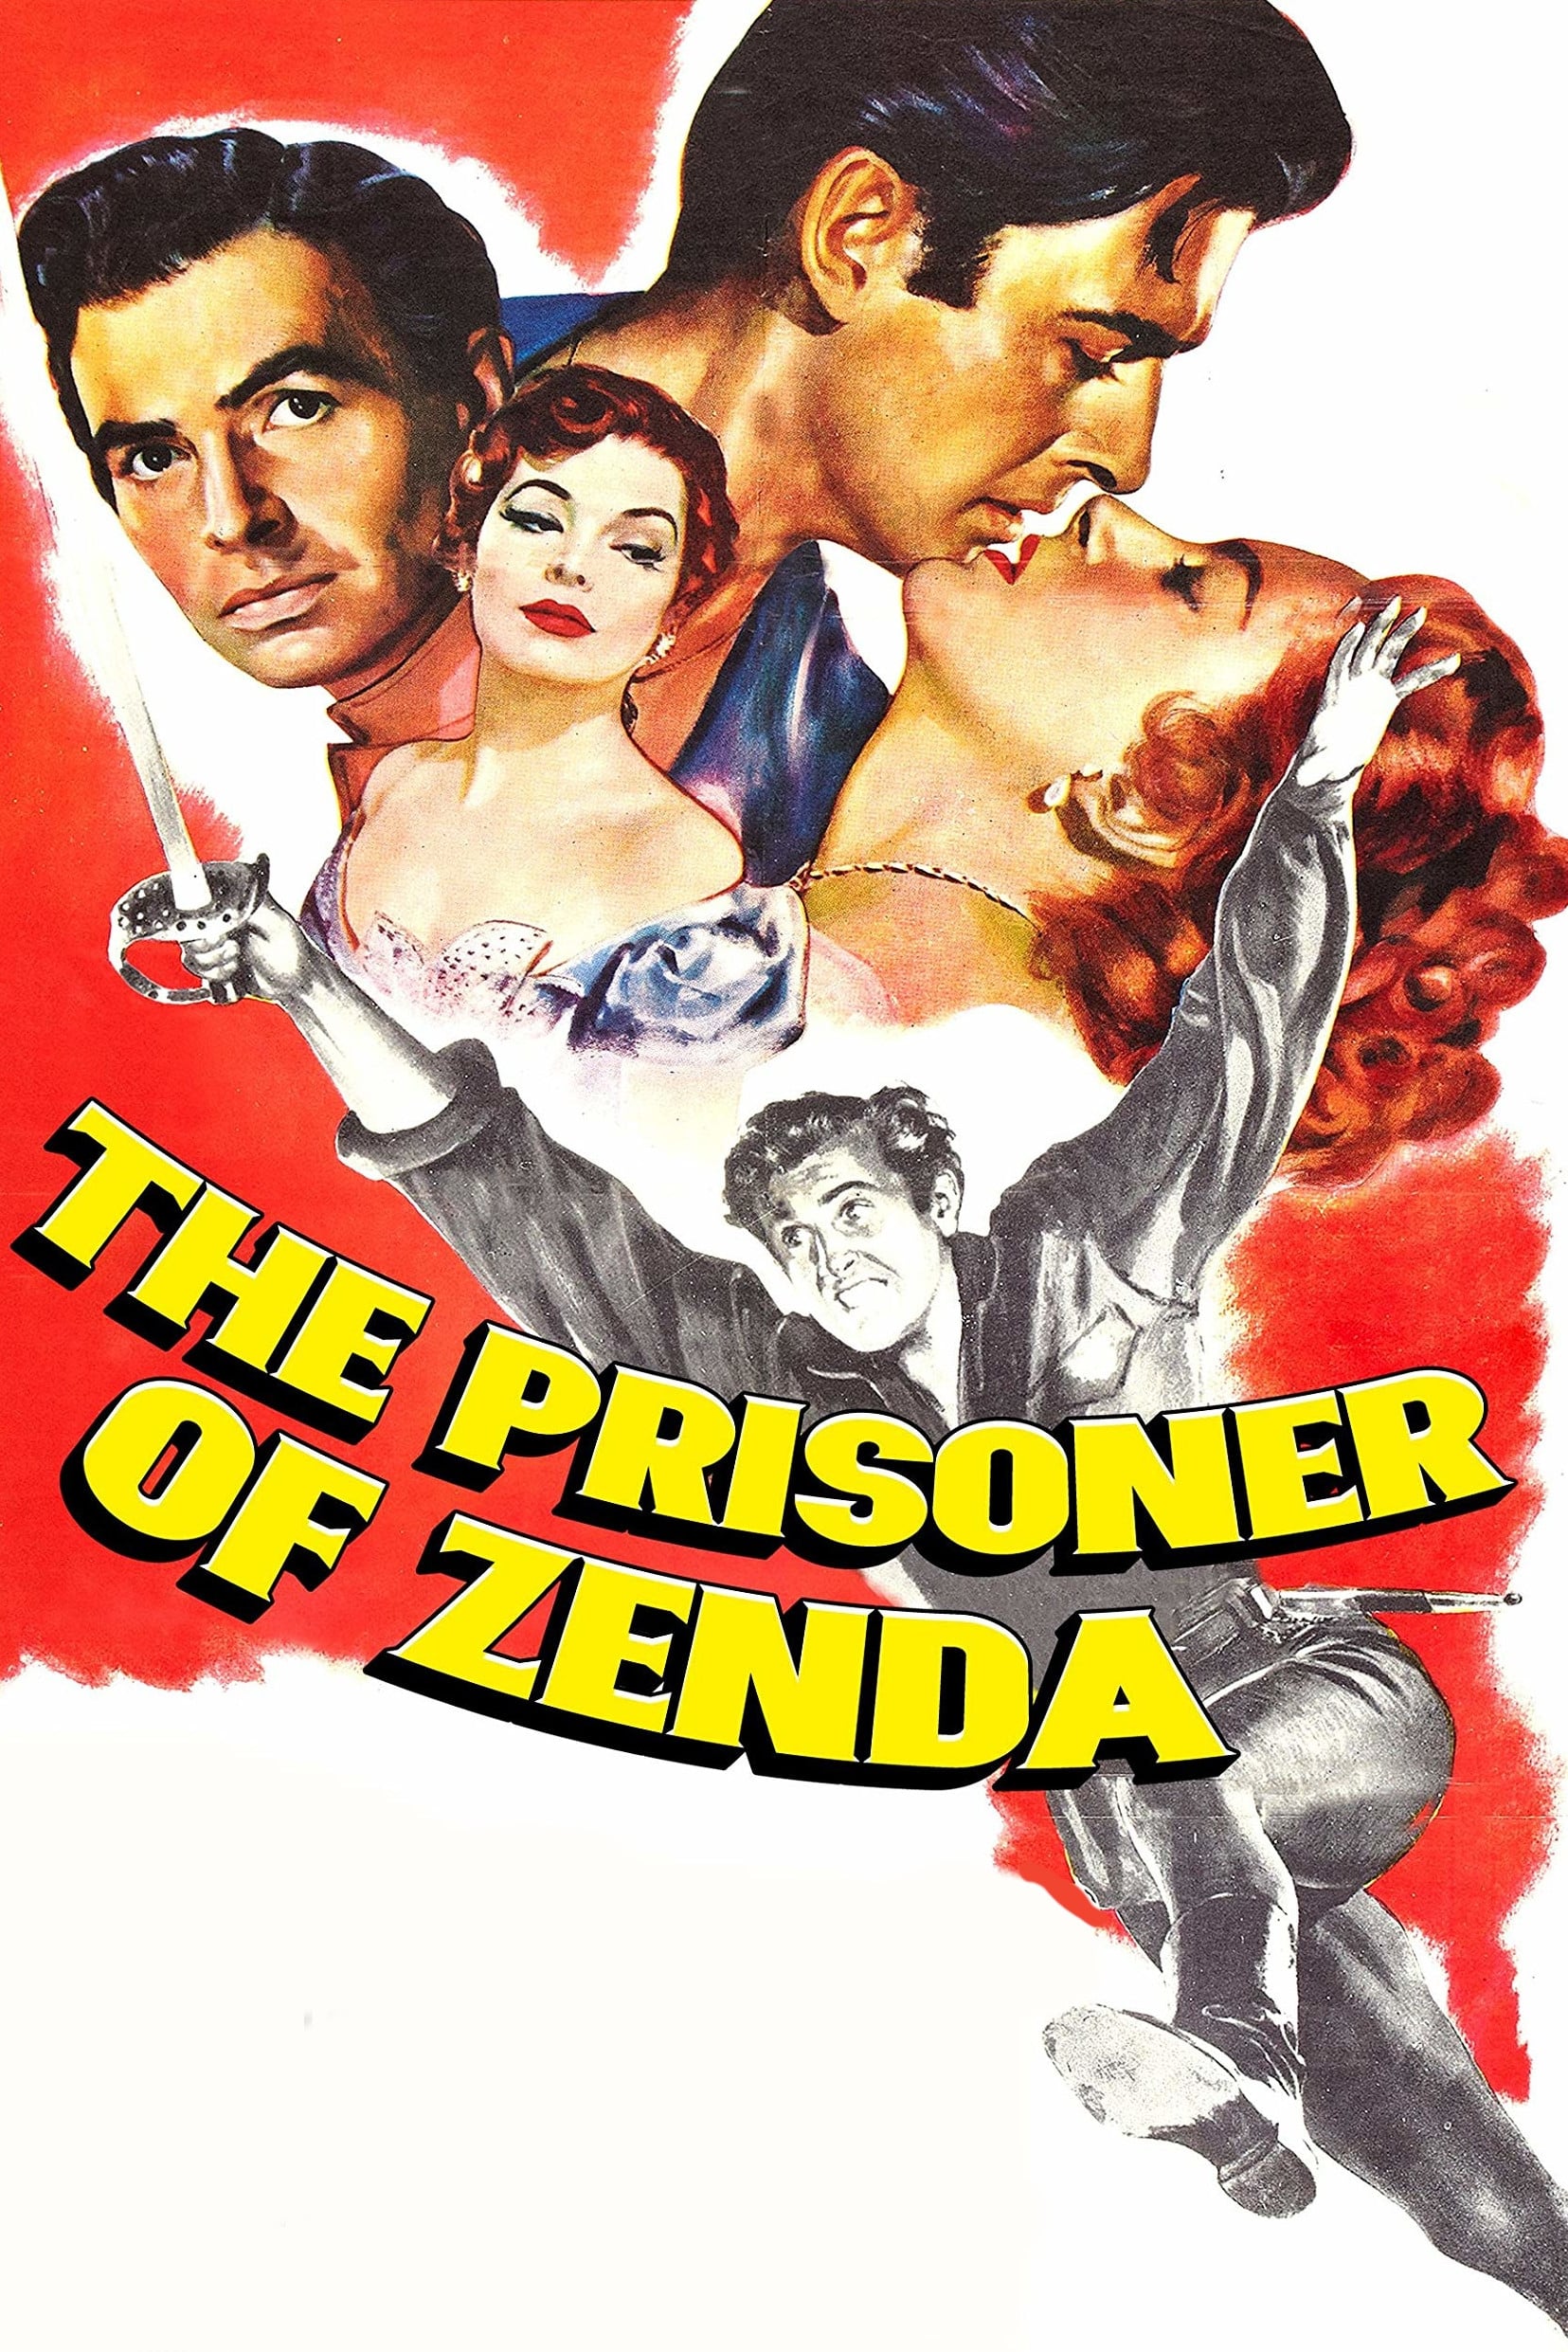 The Prisoner of Zenda (1952)